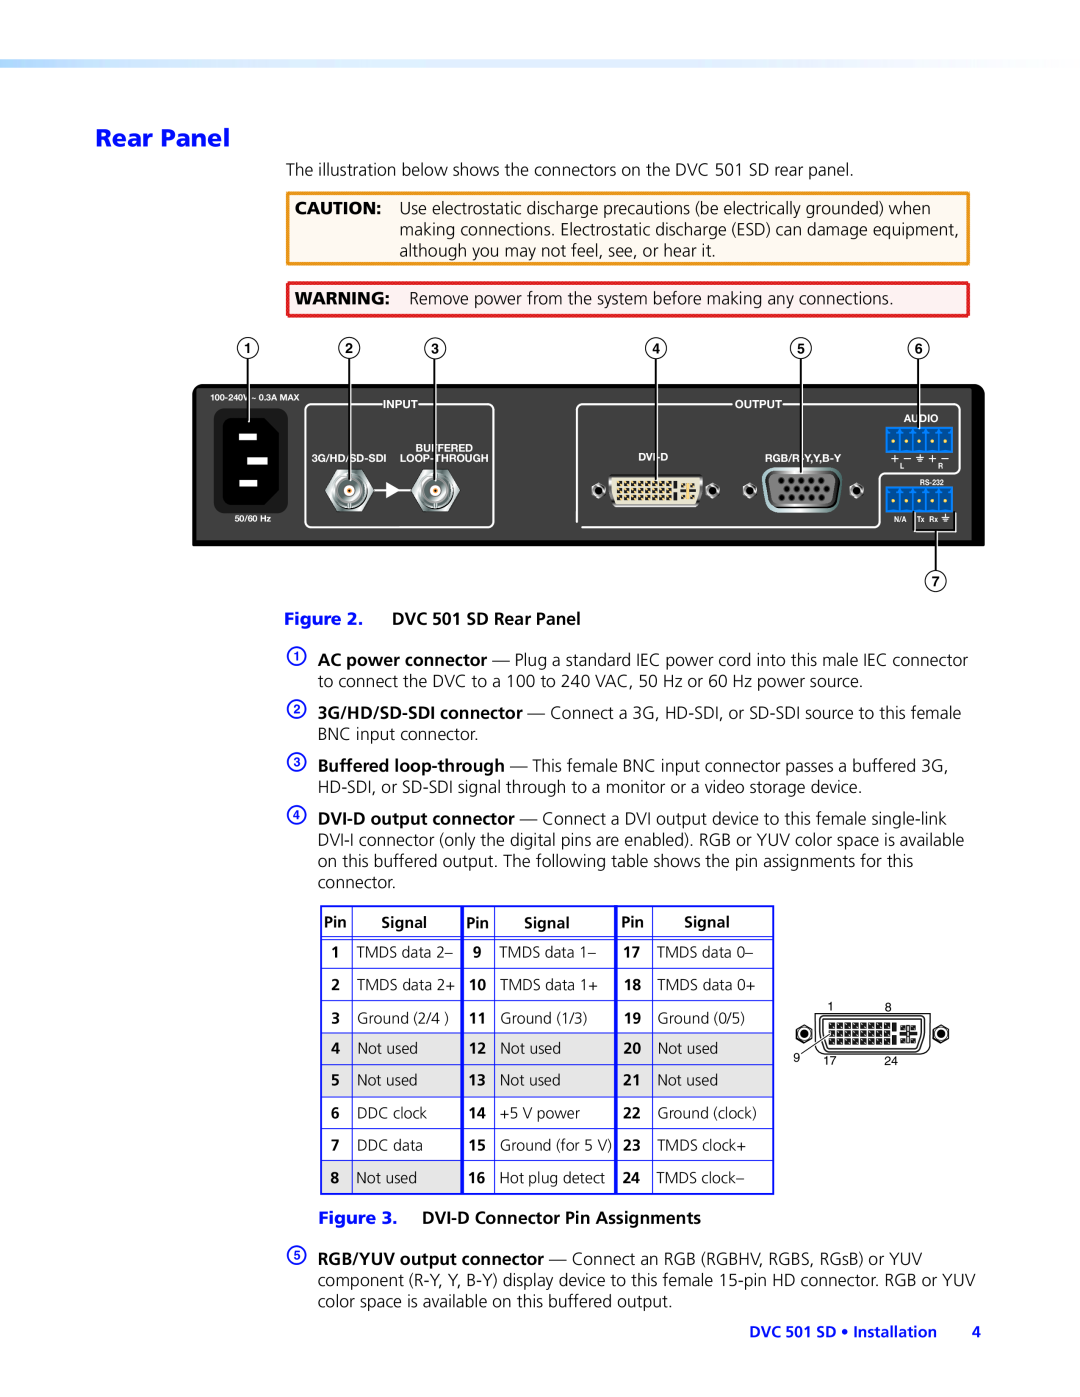 Extron electronic DVC501SD manual DVC 501 SD Rear Panel, DVI-DConnector Pin Assignments 